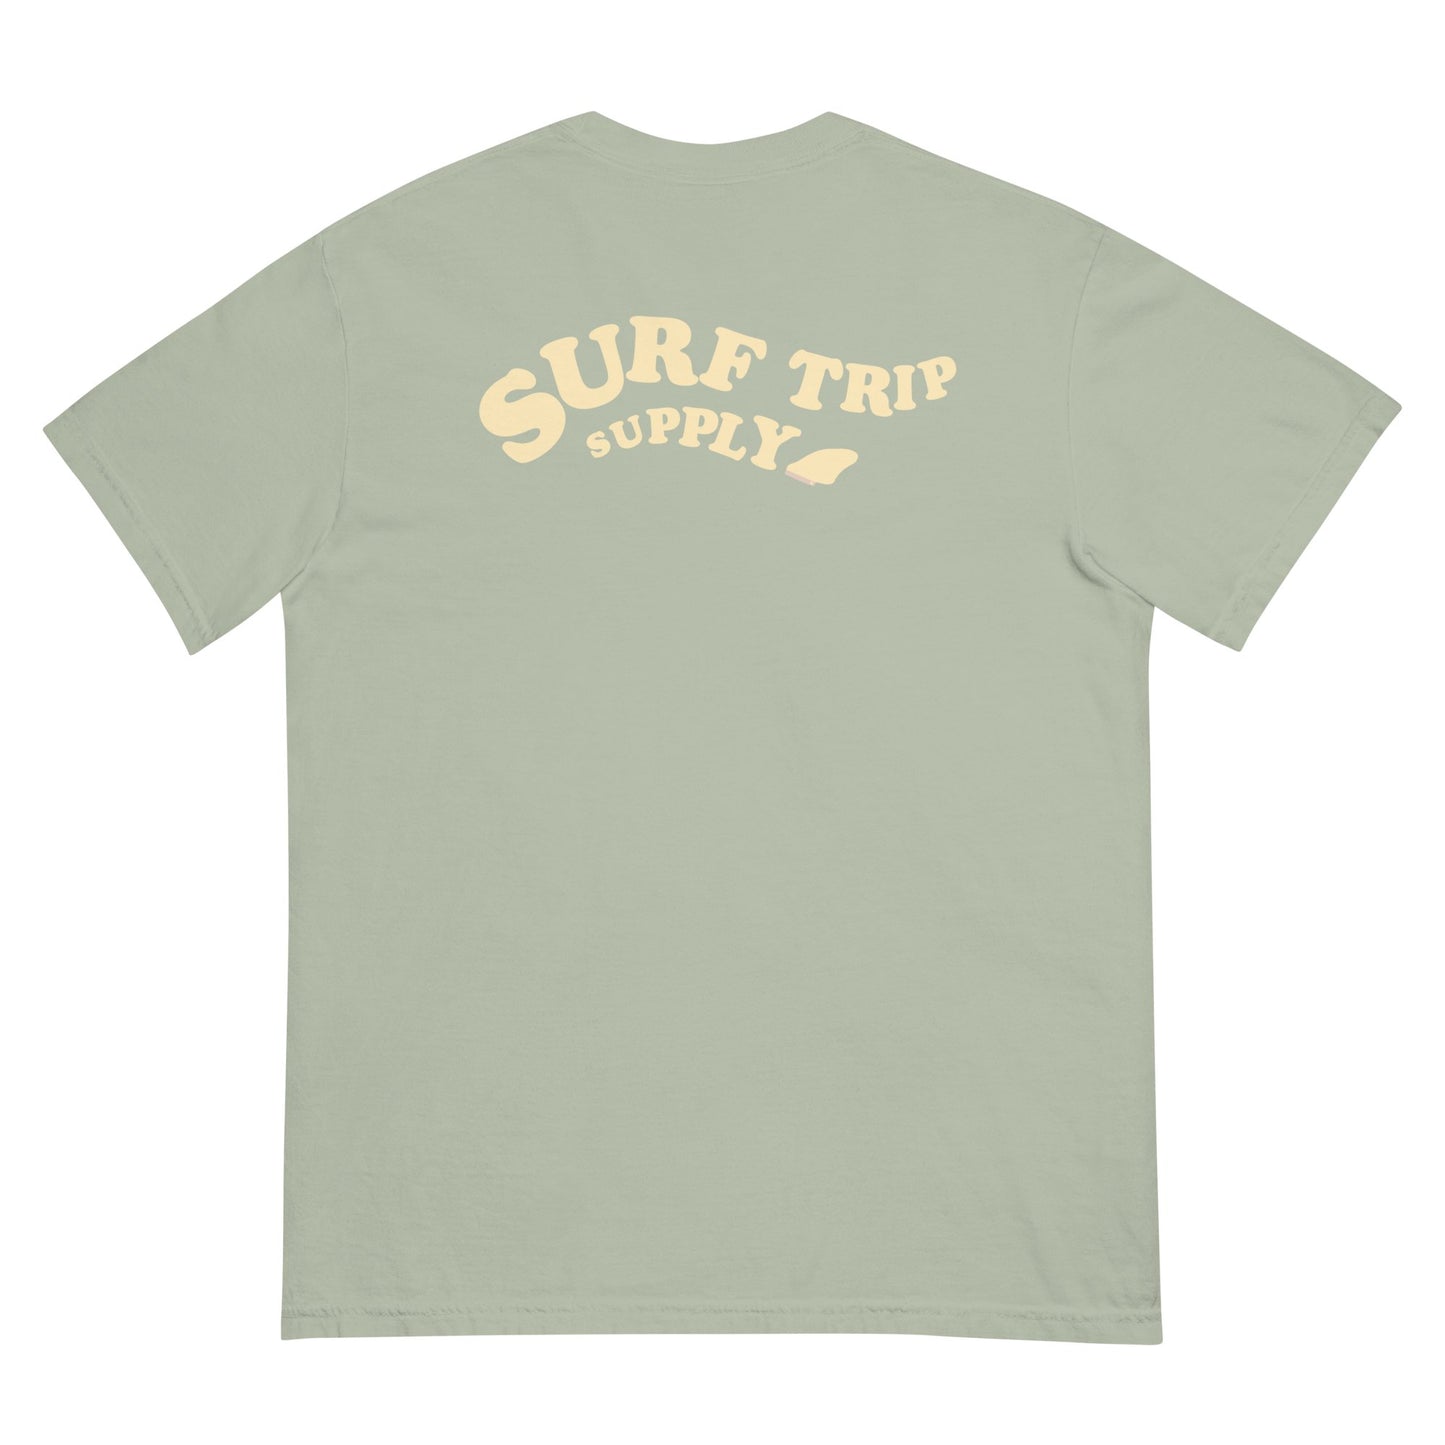 Groove Tee - Surf Trip Supply